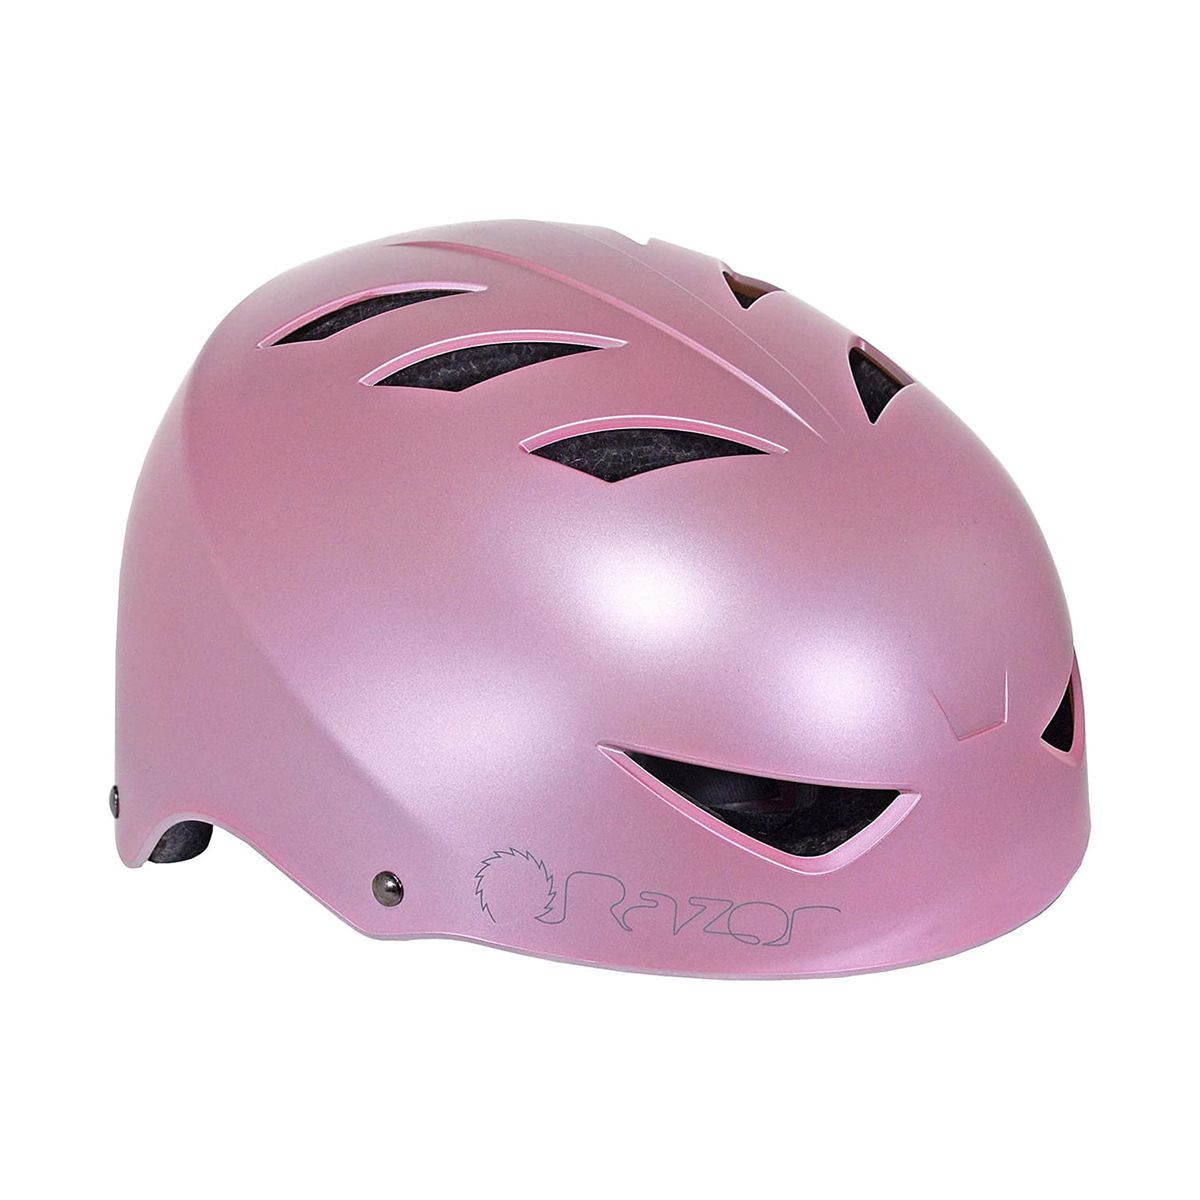 [RDY] [] Razor V-12 ]ԗpwbg lp t[TCY S }`X|[c sNNH[c [yVCOʔ] | Razor V-12 Adult One Size Safety Multi Sport Bicycle Helmet, Pink Quartz